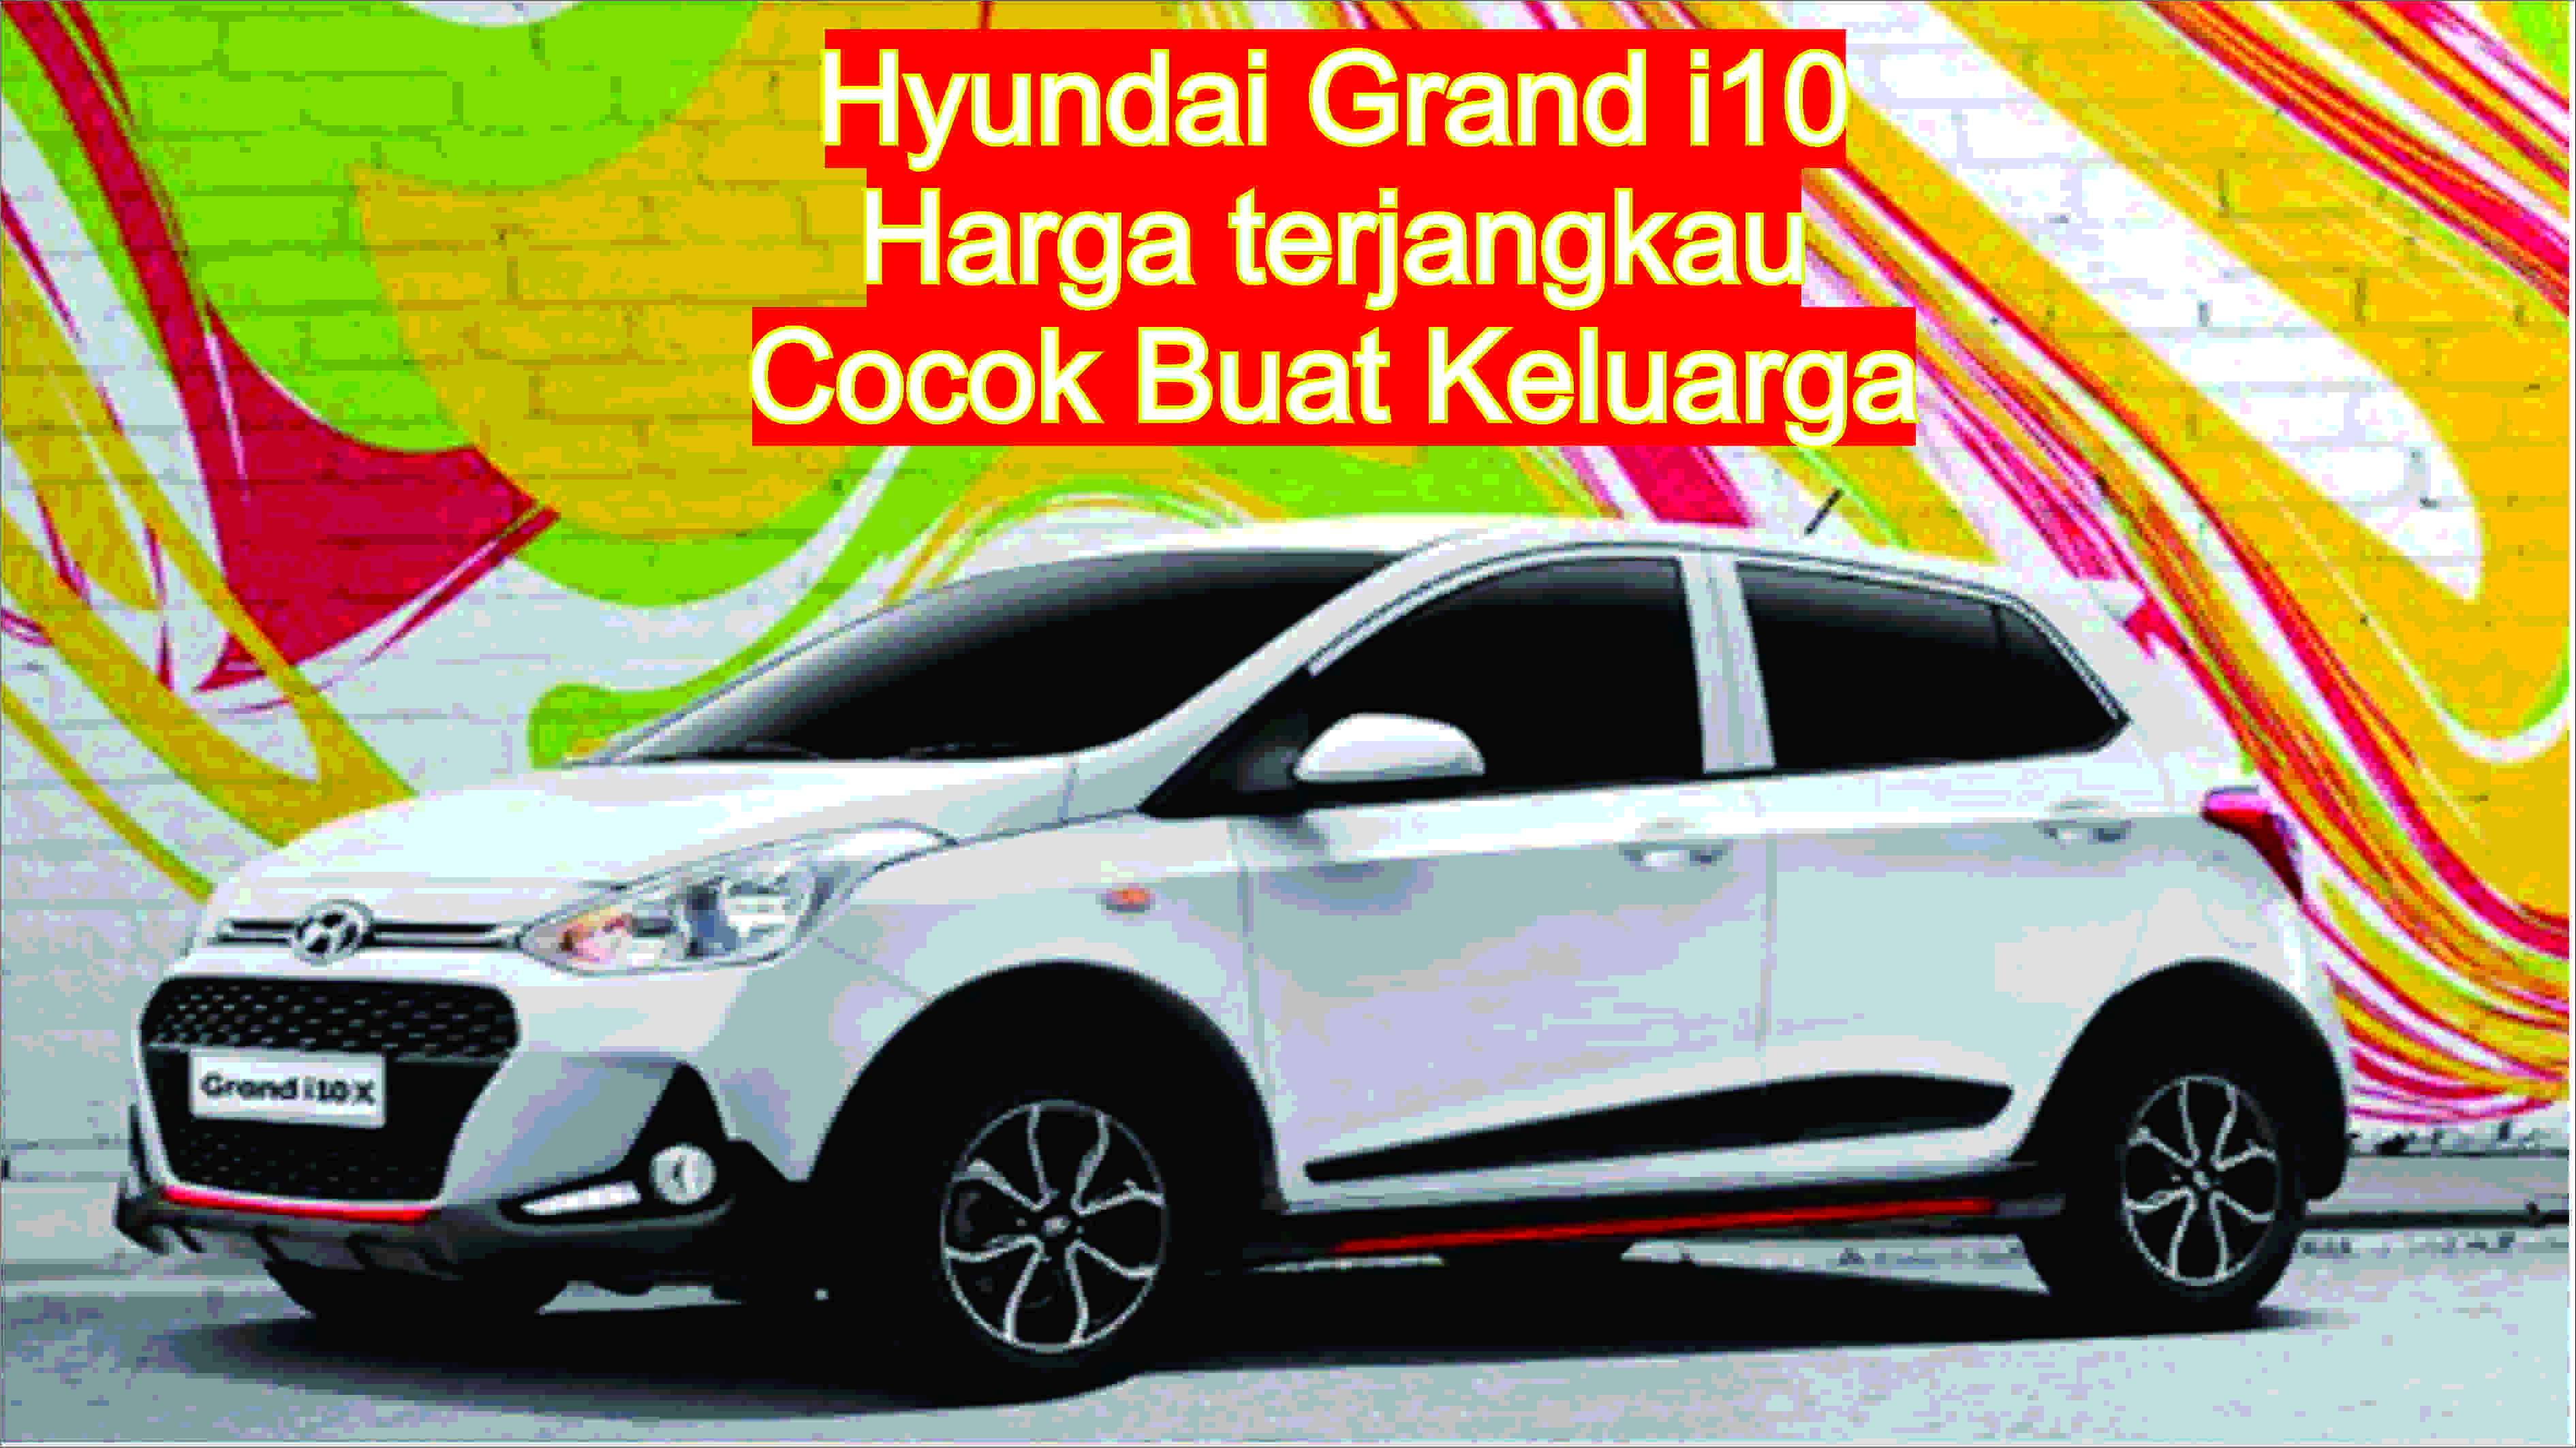 Hyundai Grand i10:Mobil Murah Cocok Banget Buat Bawa Keluarga Jalan - Jalan